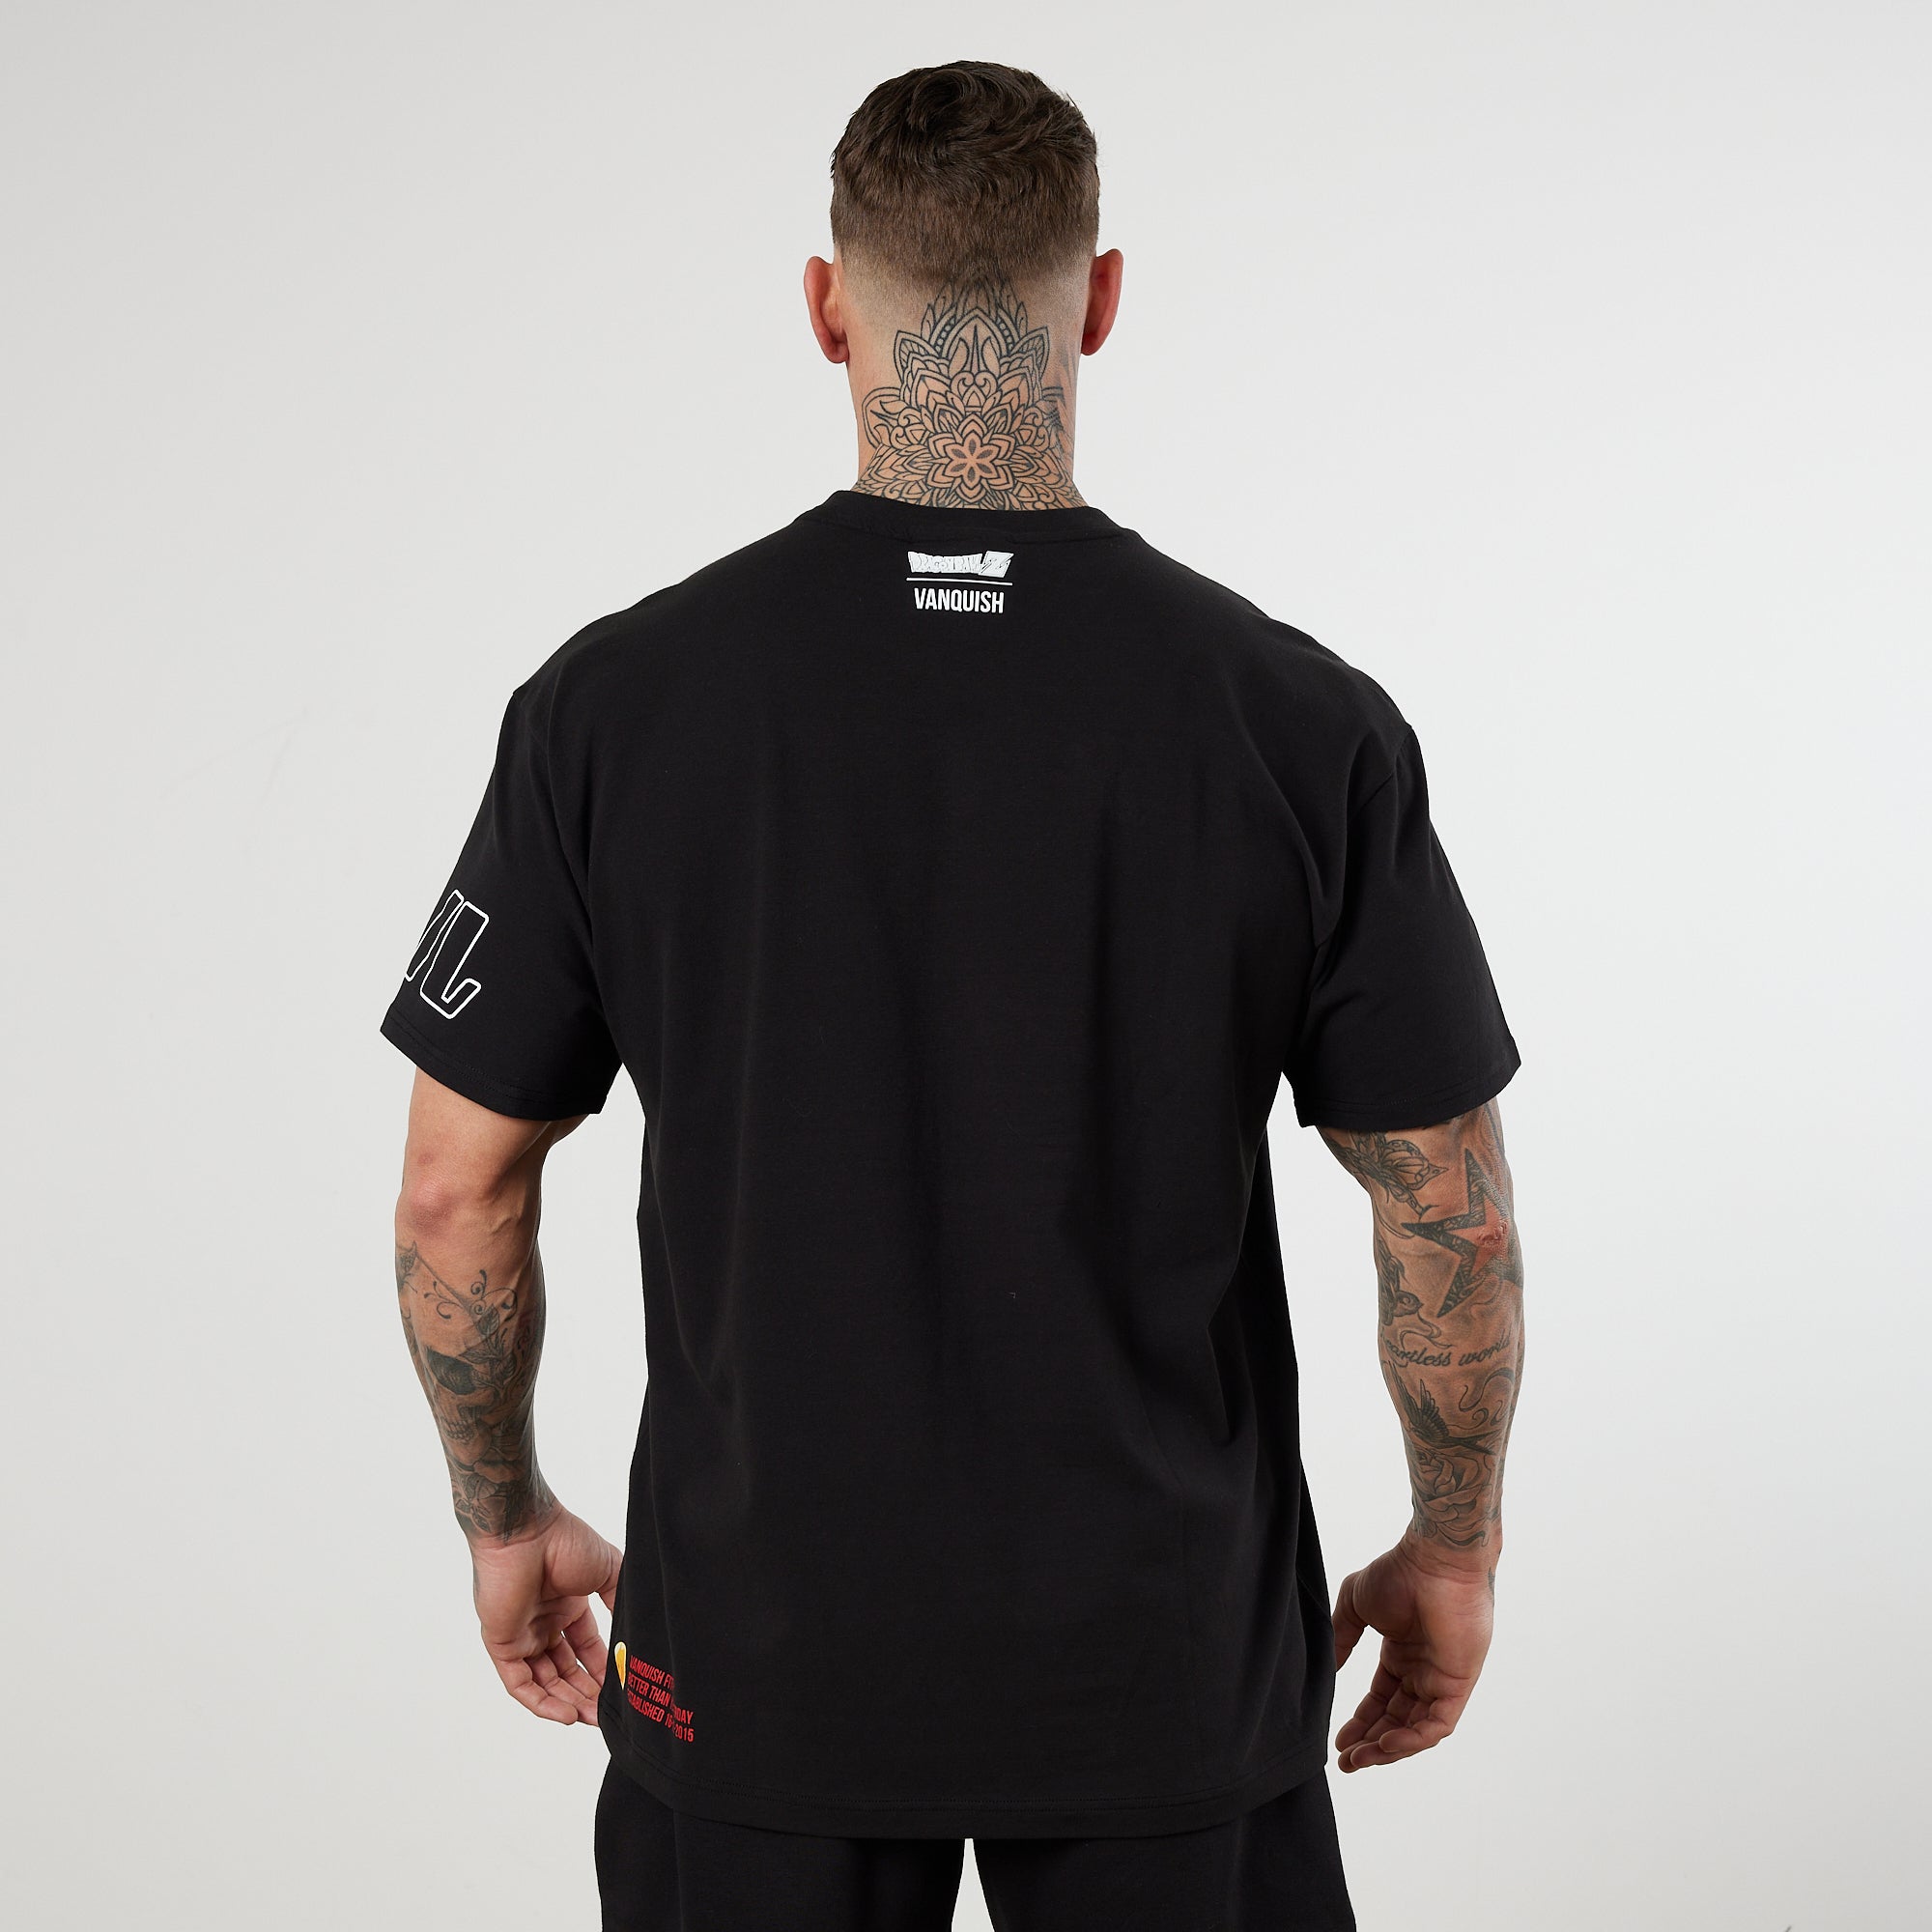 Vanquish DBZ CS Cell Black Oversized T Shirt